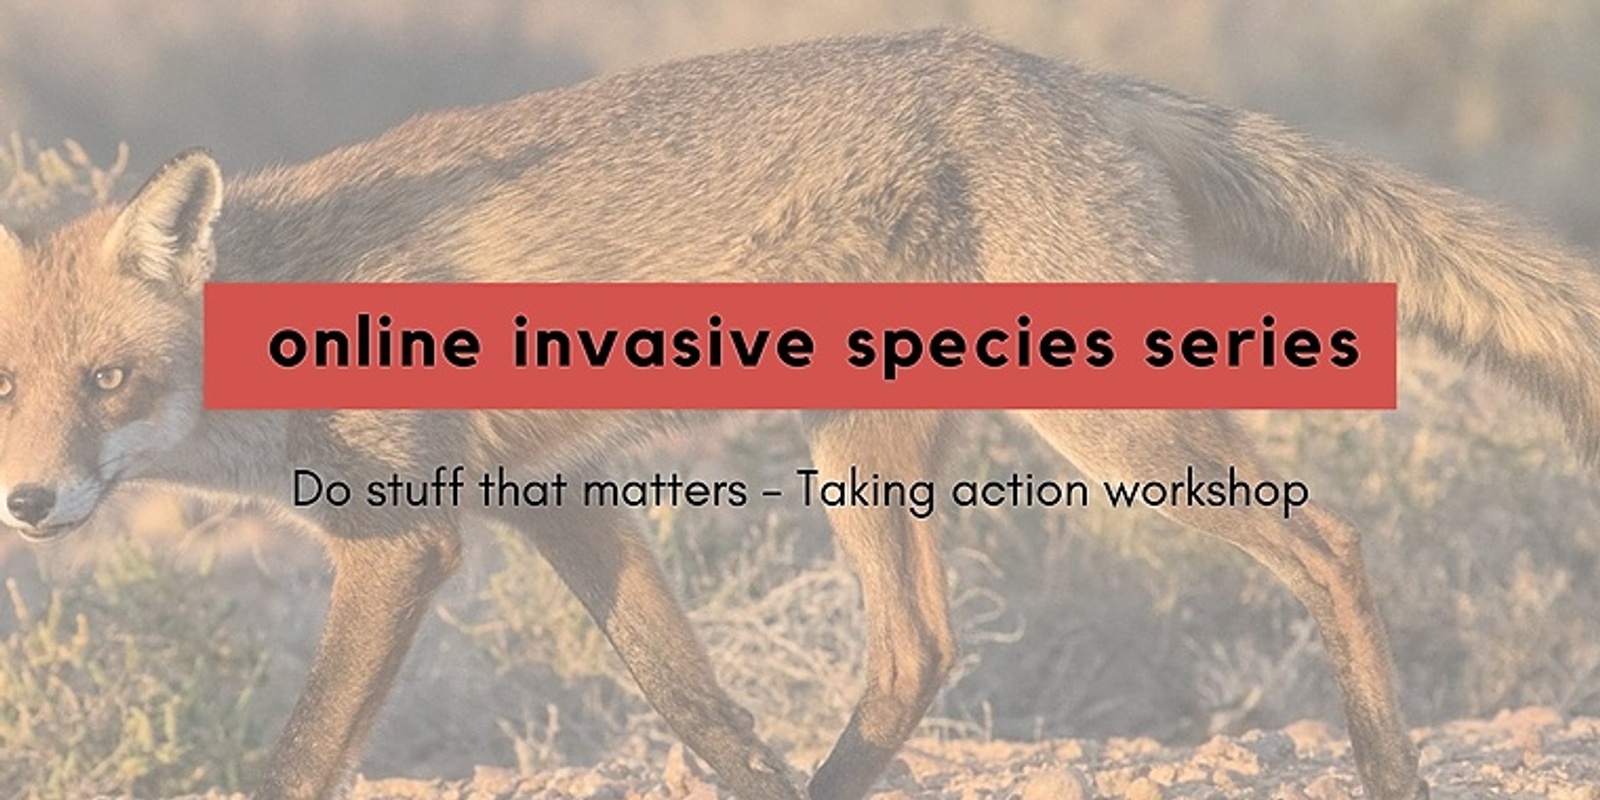 Do stuff that matters - Taking action workshop| Online invasive species series